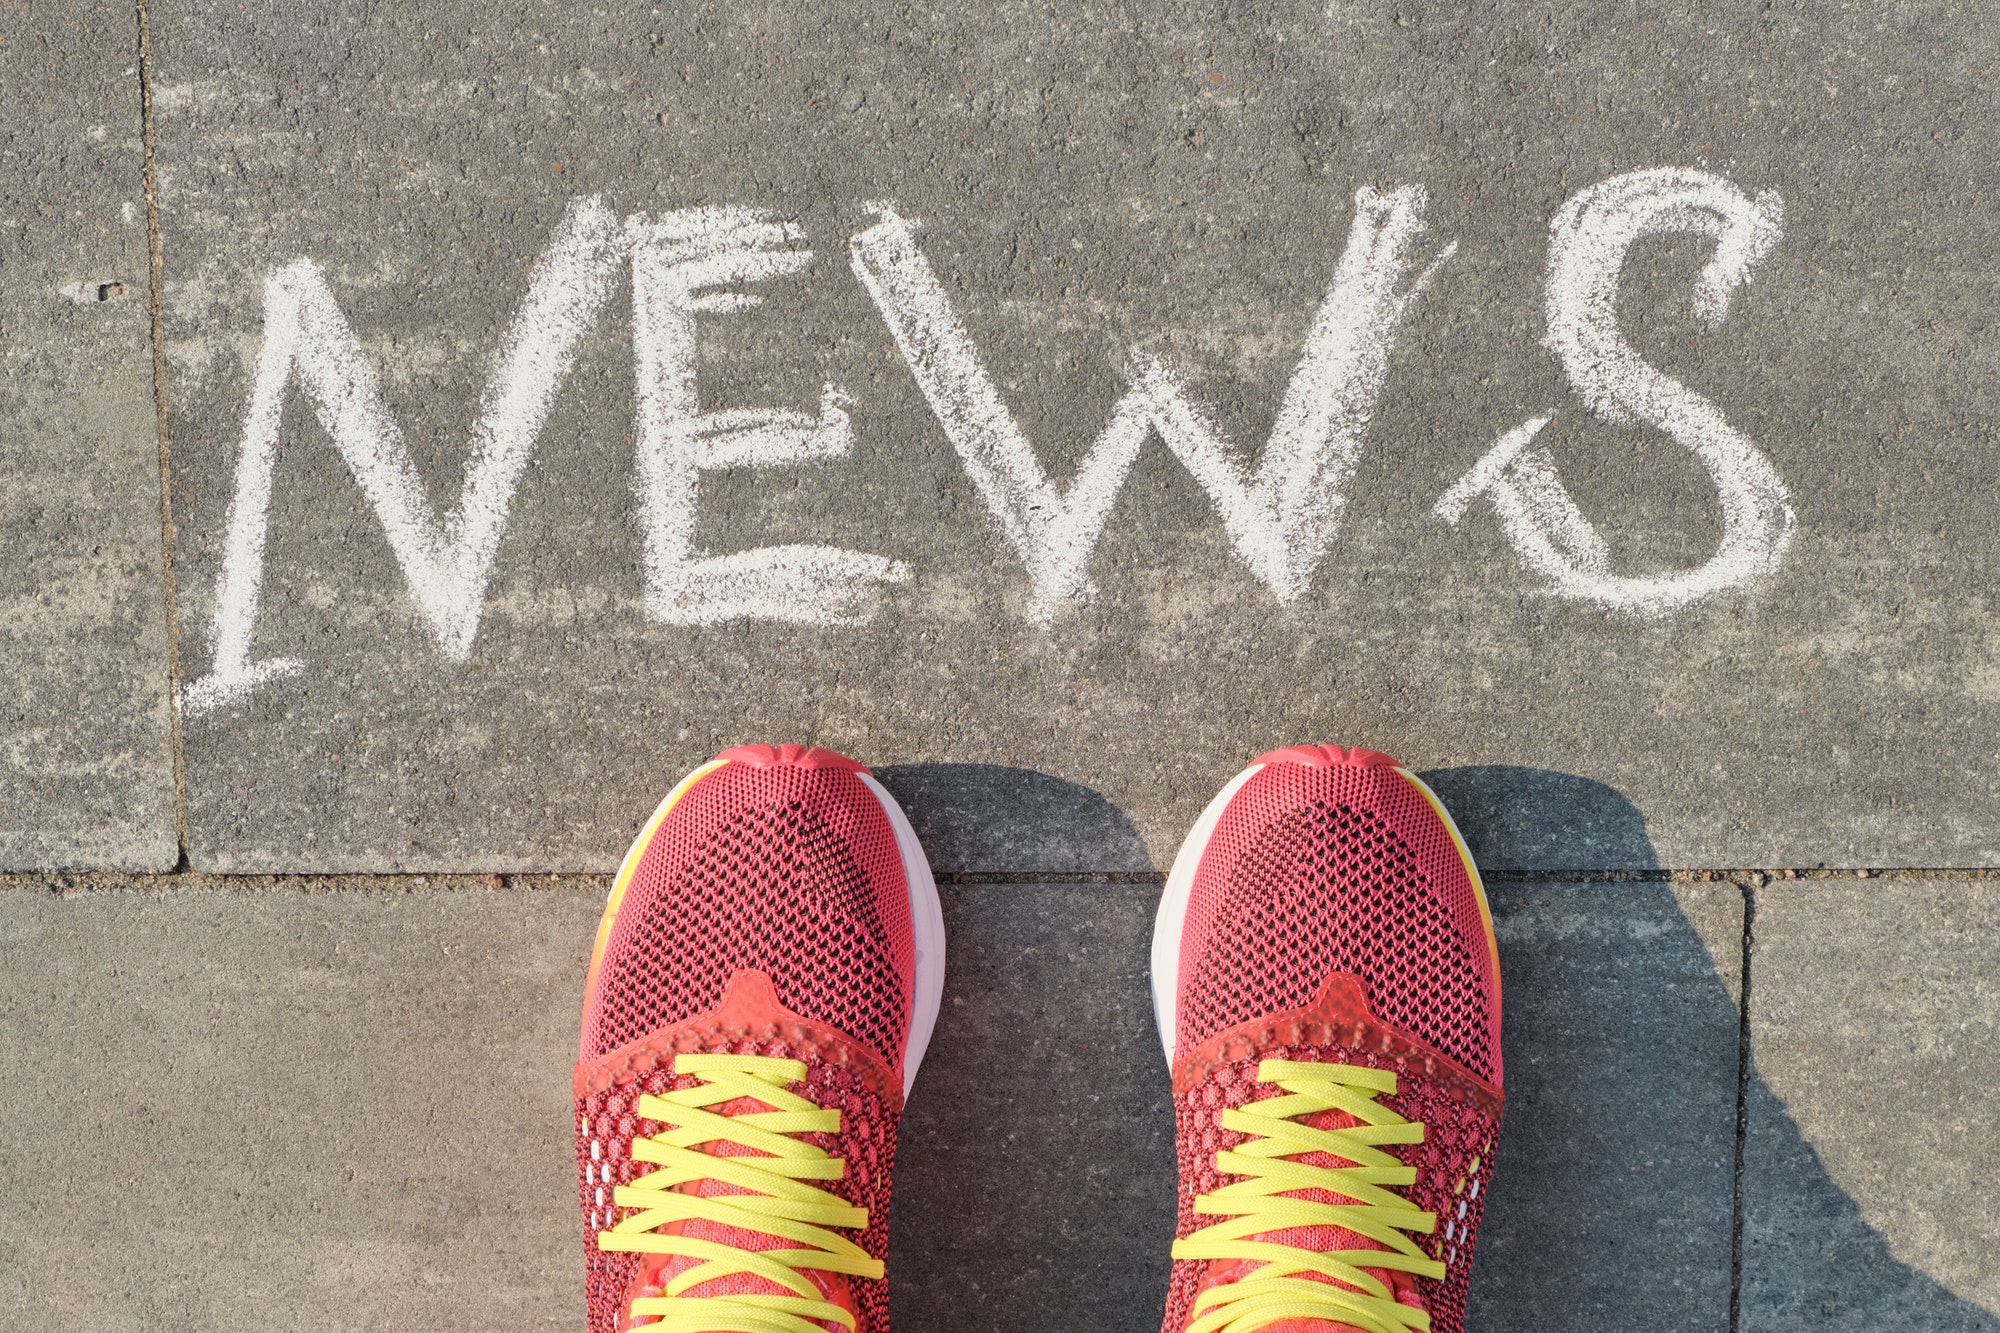 Word news on gray sidewalk with women legs in sneakers, top view